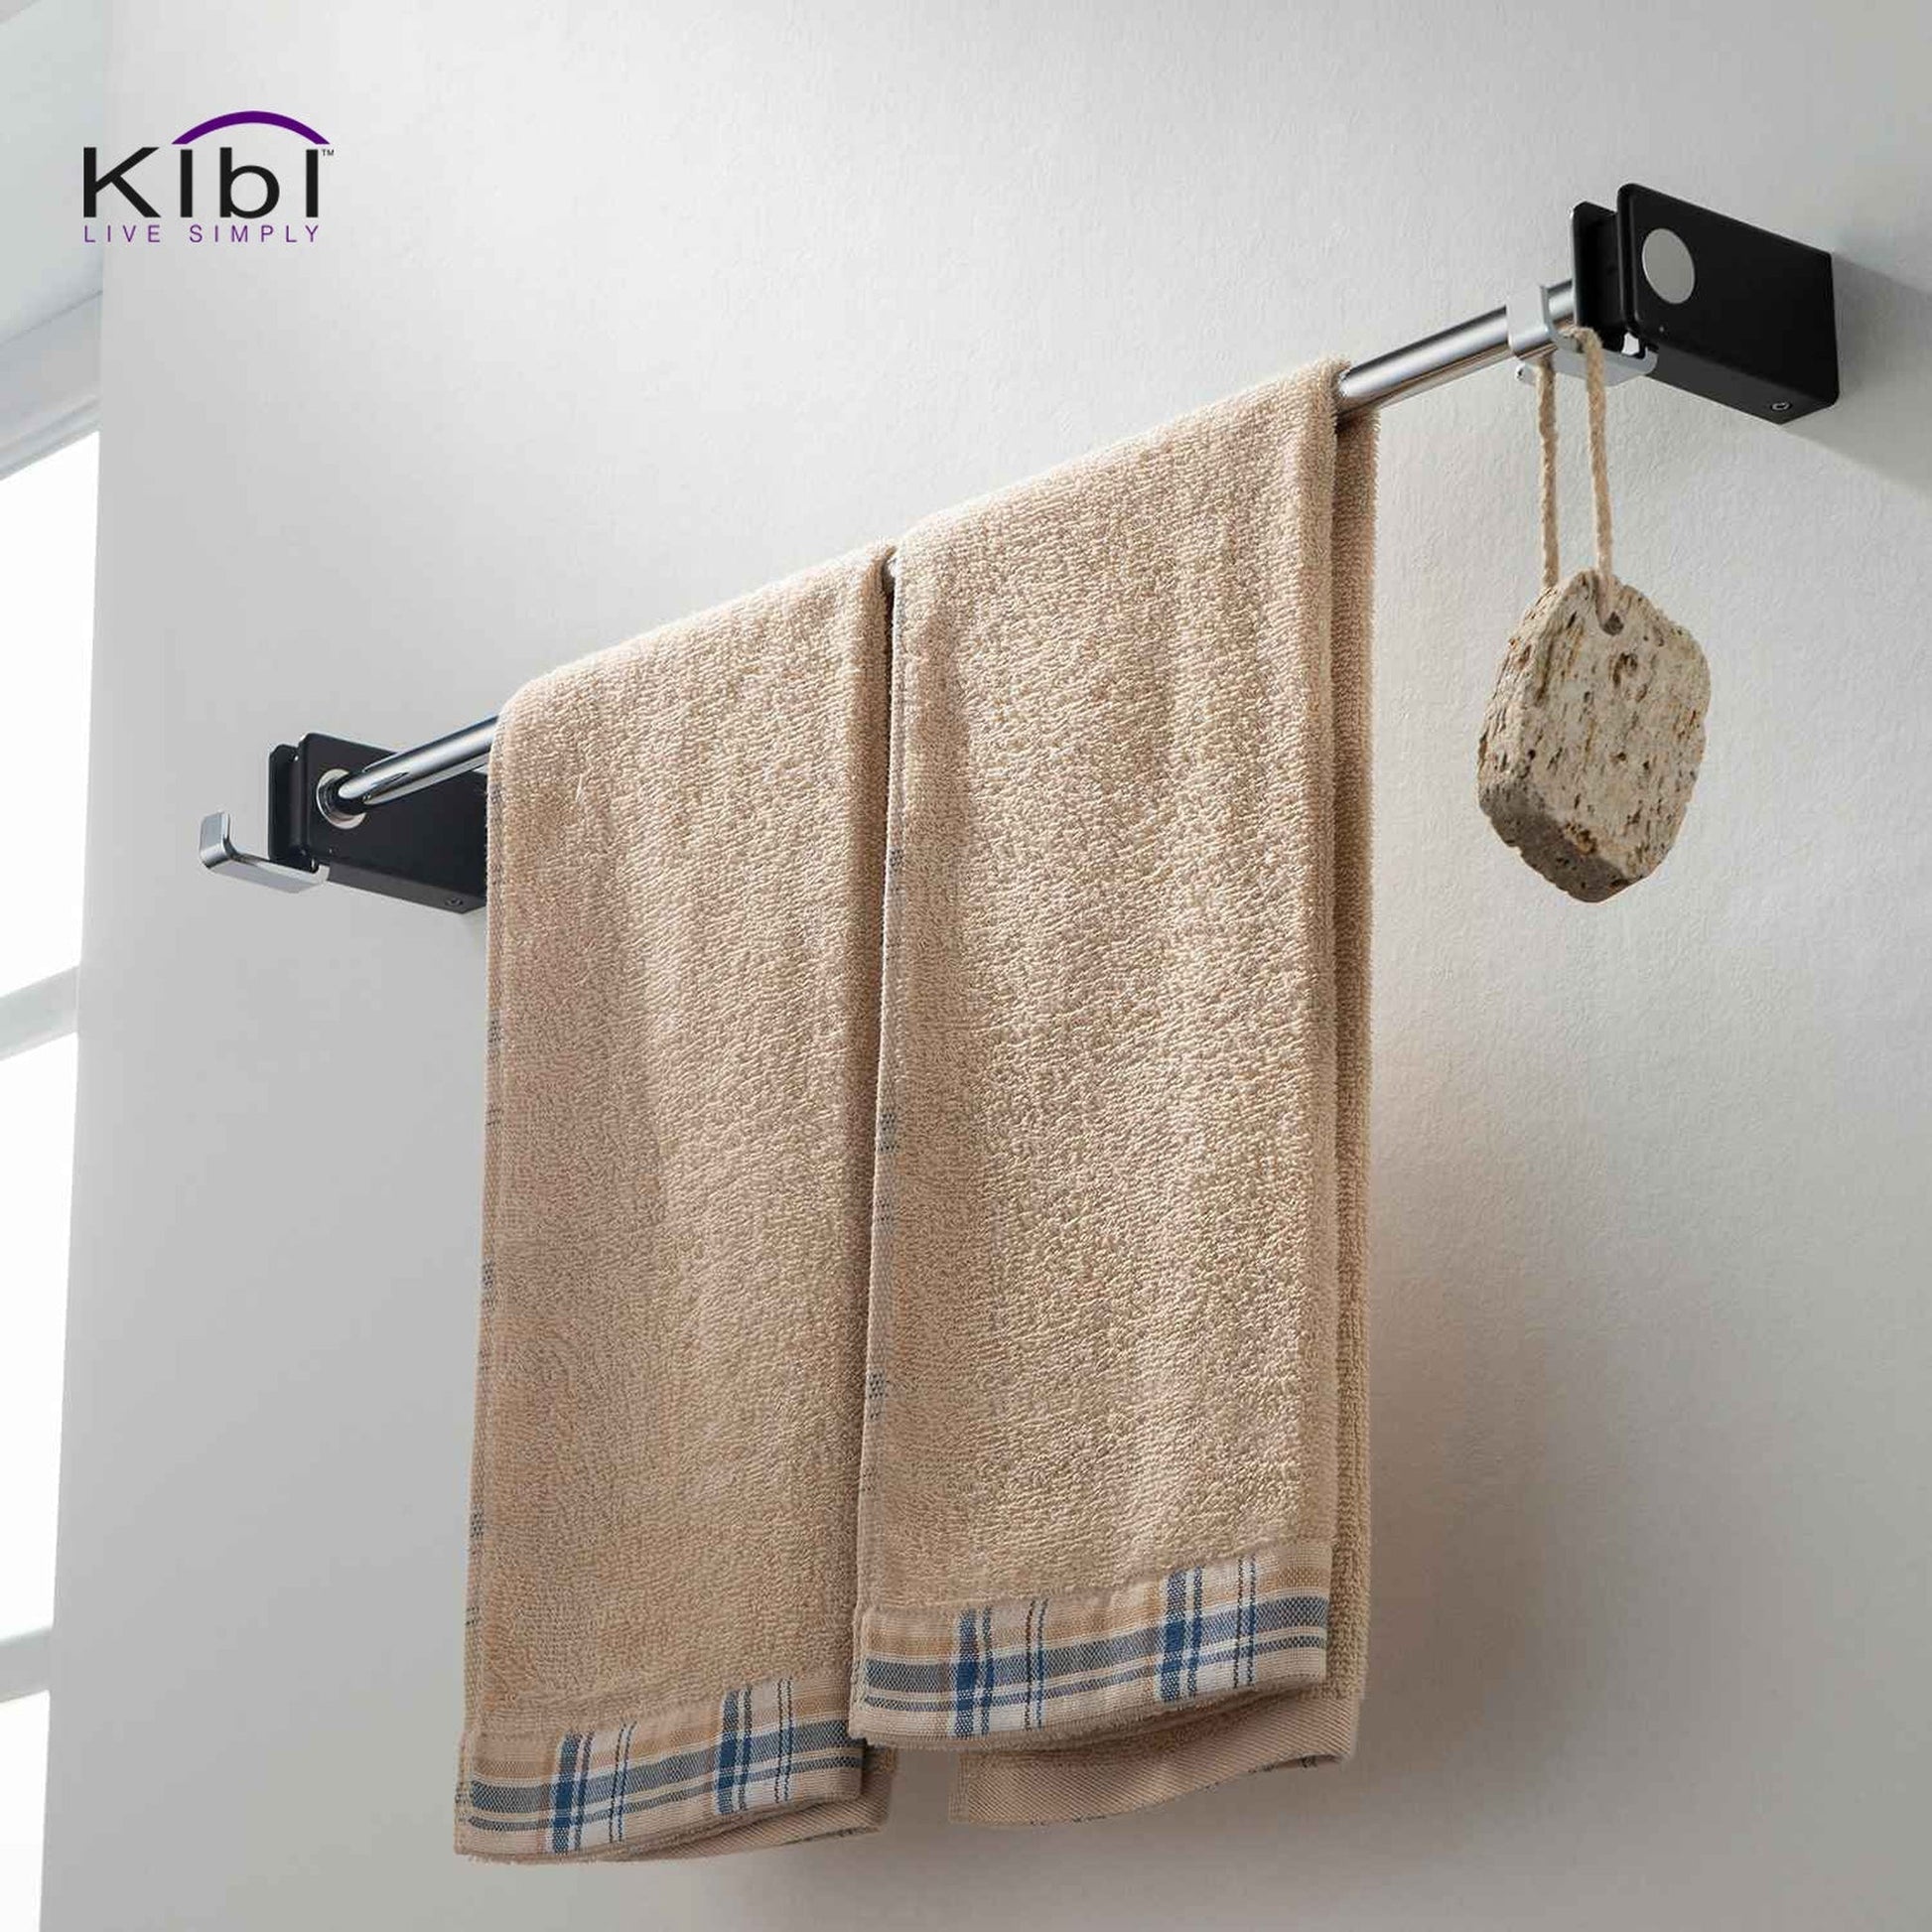 KIBI Artis Bathroom Towel Bar in Chrome Black Finish